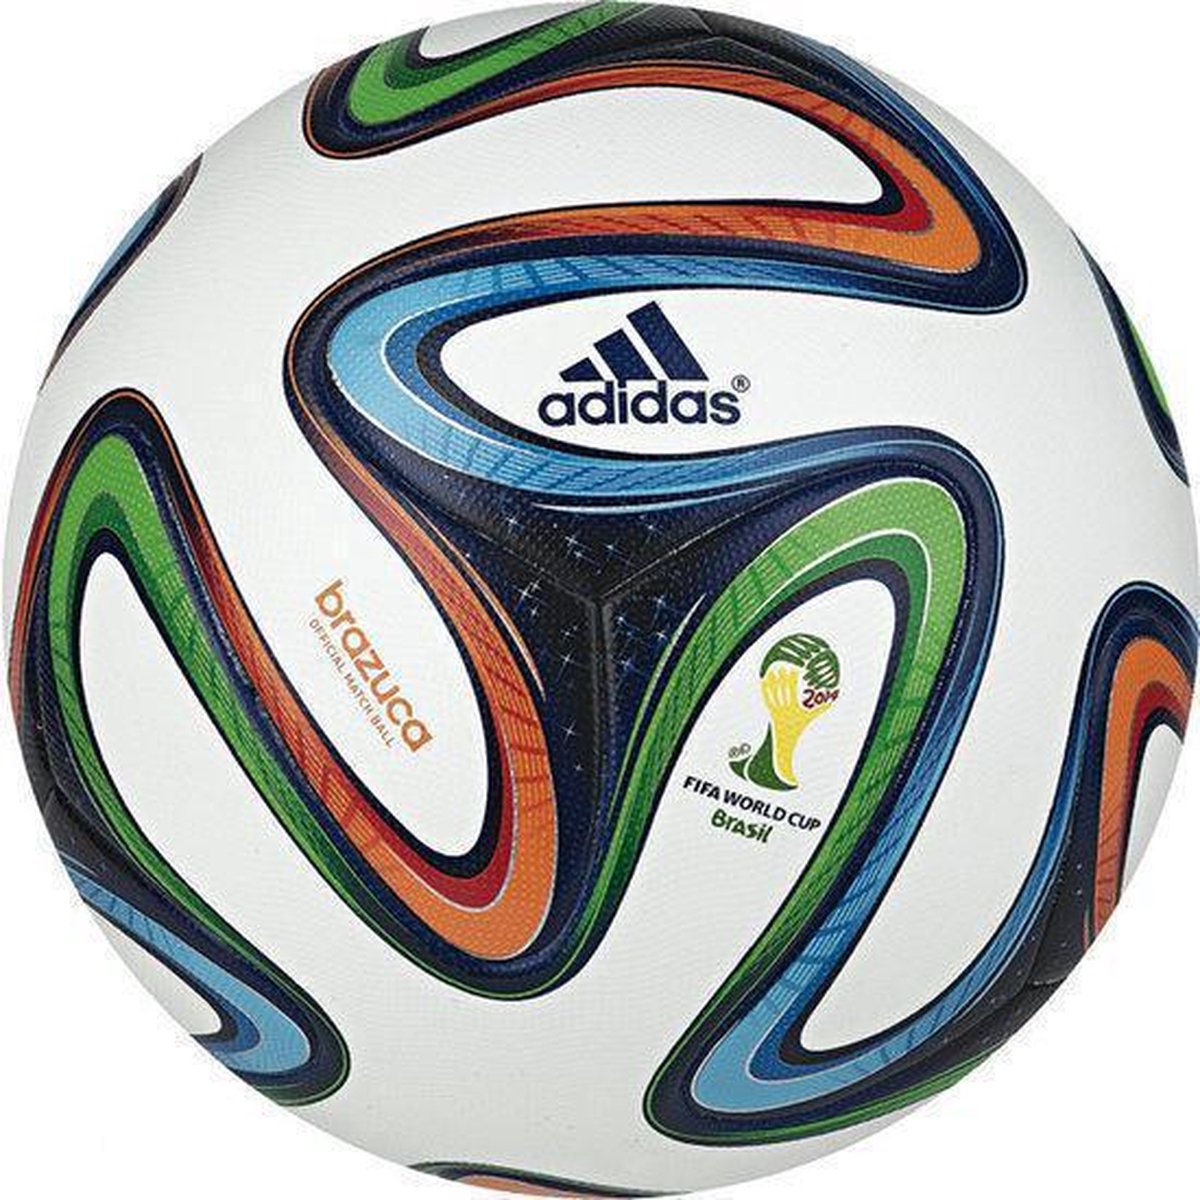 Adidas Official Match Ball WK Voetbal | bol.com